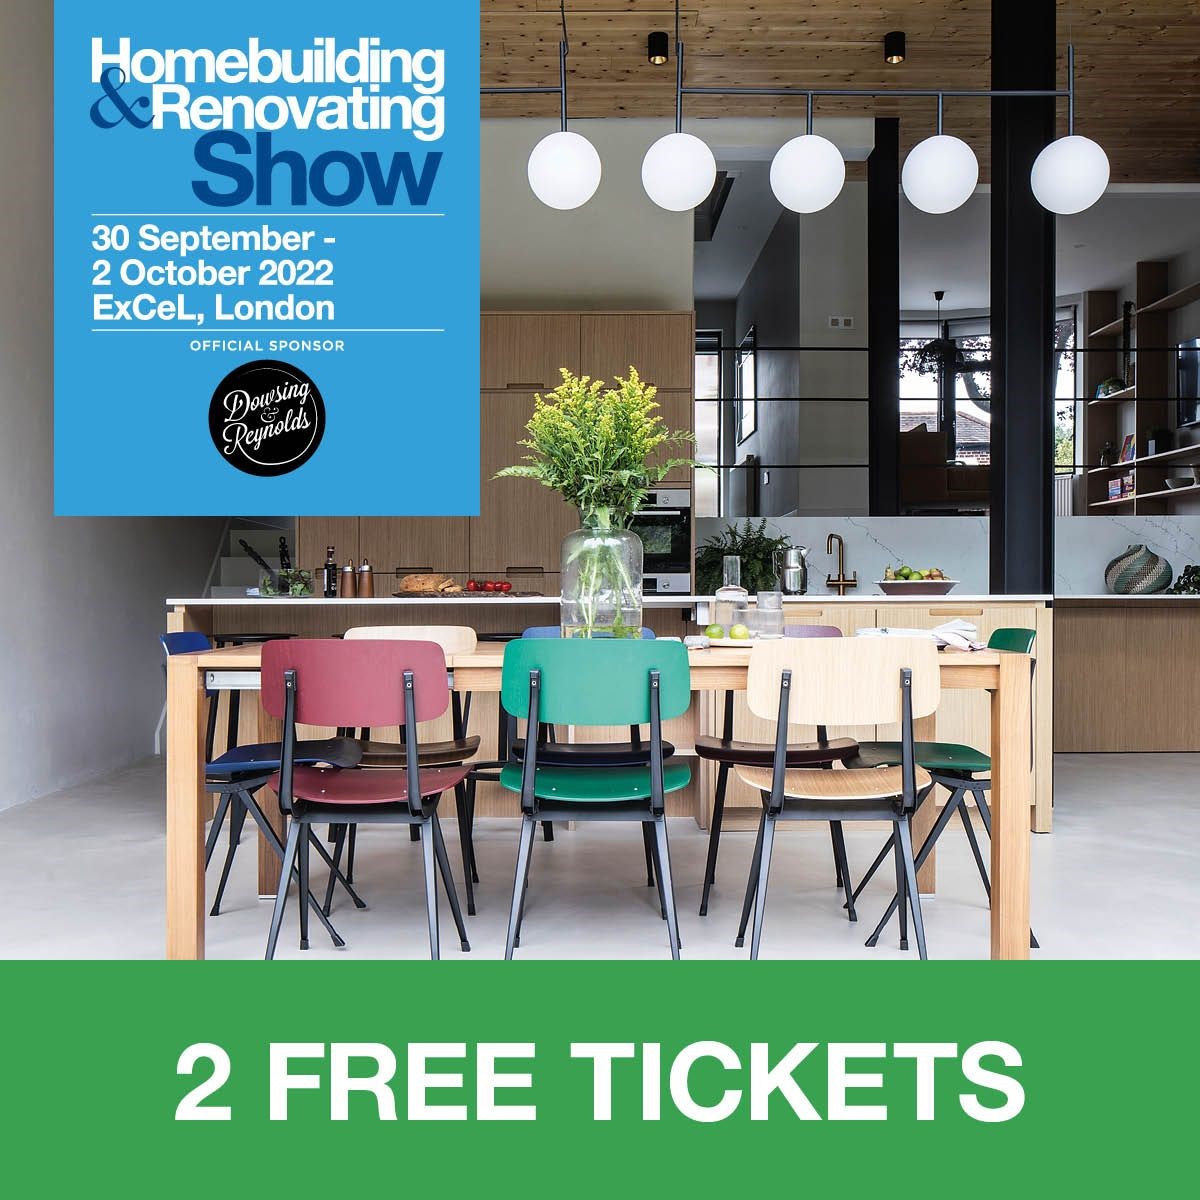 Homebuilding & Renovating show 2022